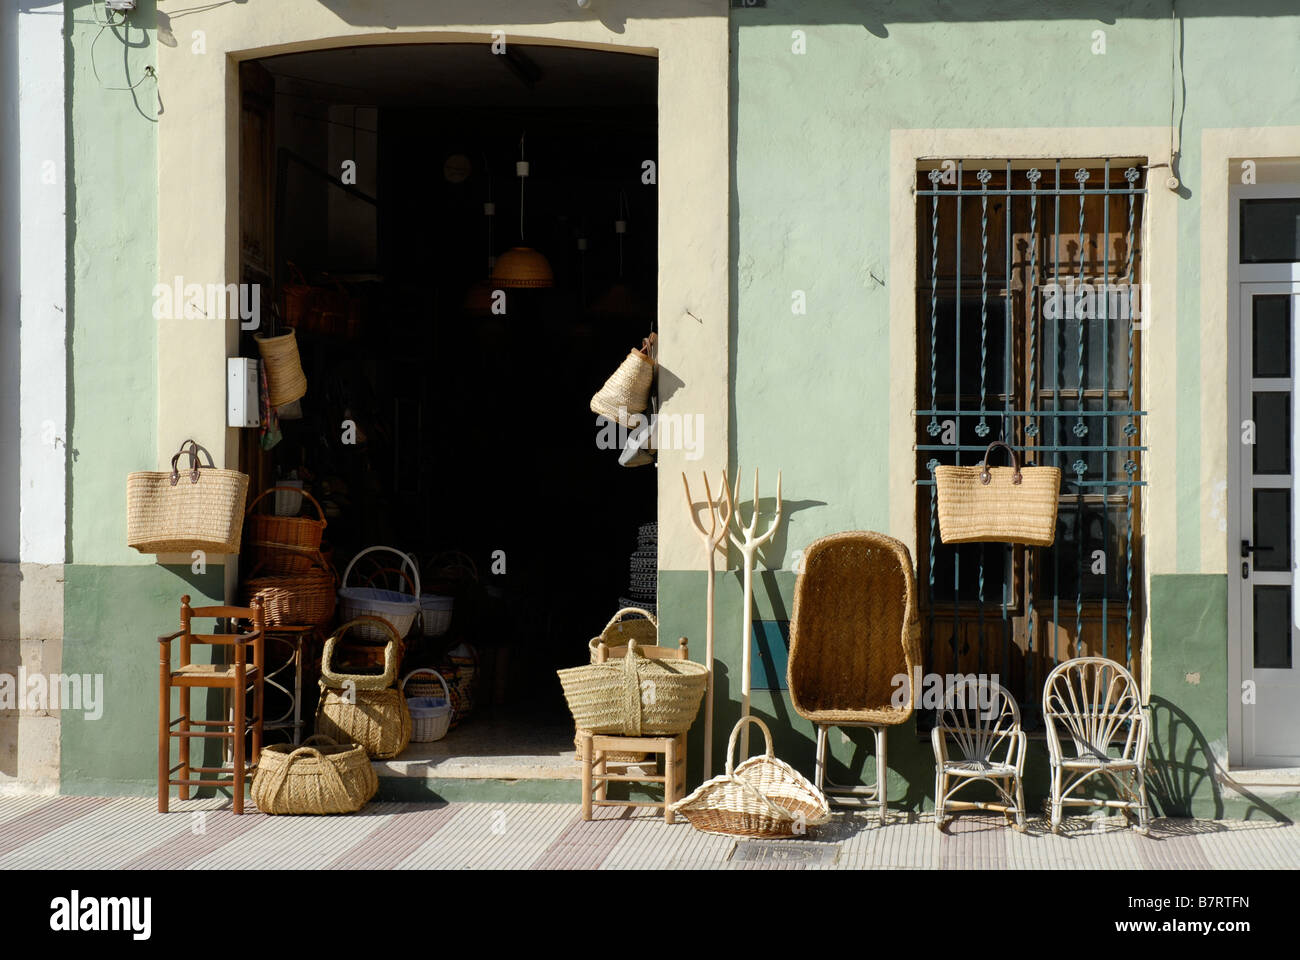 souvenir shop selling traditional spanish baskets and cane furniture, Gata de Gorgos, Alicante Province, Comunidad Valenciana, S Stock Photo